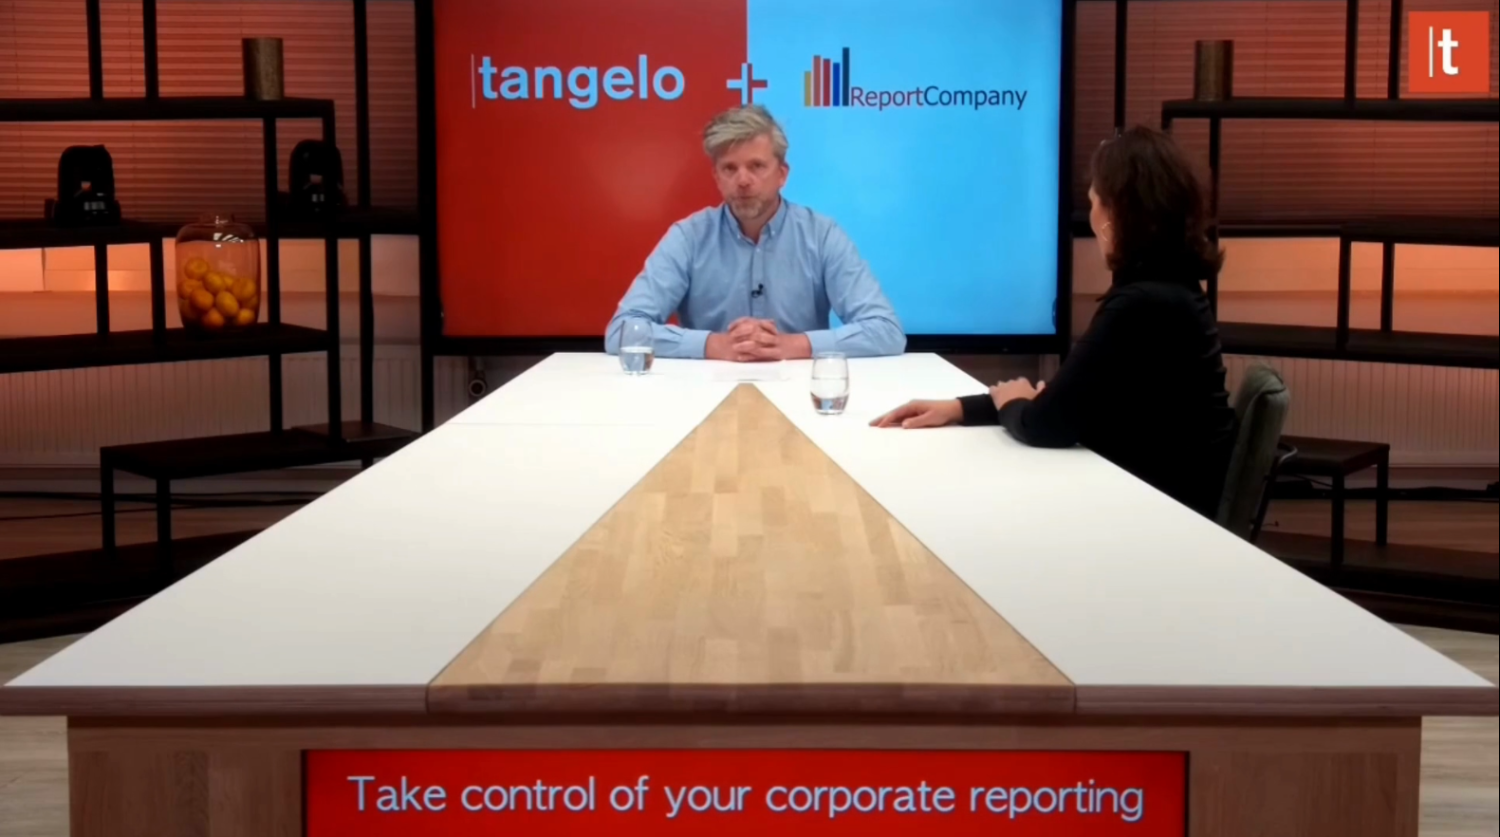 Tangelo Talks interview with Carola La Grouw - Hromadka of Report Company.